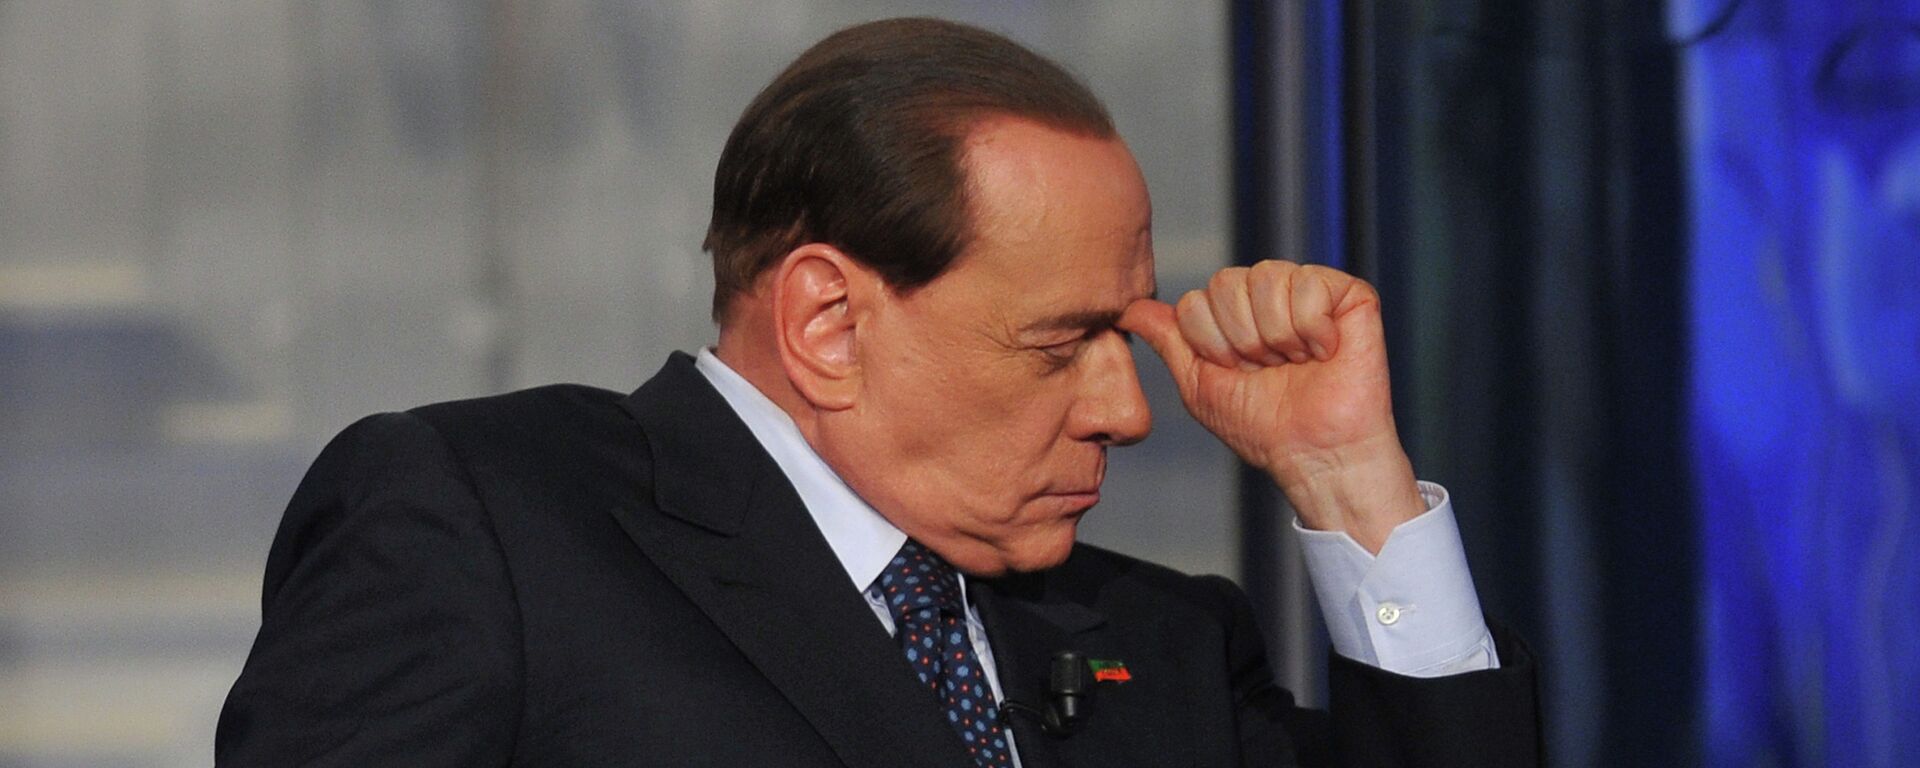 Former Italian Prime Minister Silvio Berlusconi  - Sputnik International, 1920, 02.09.2020